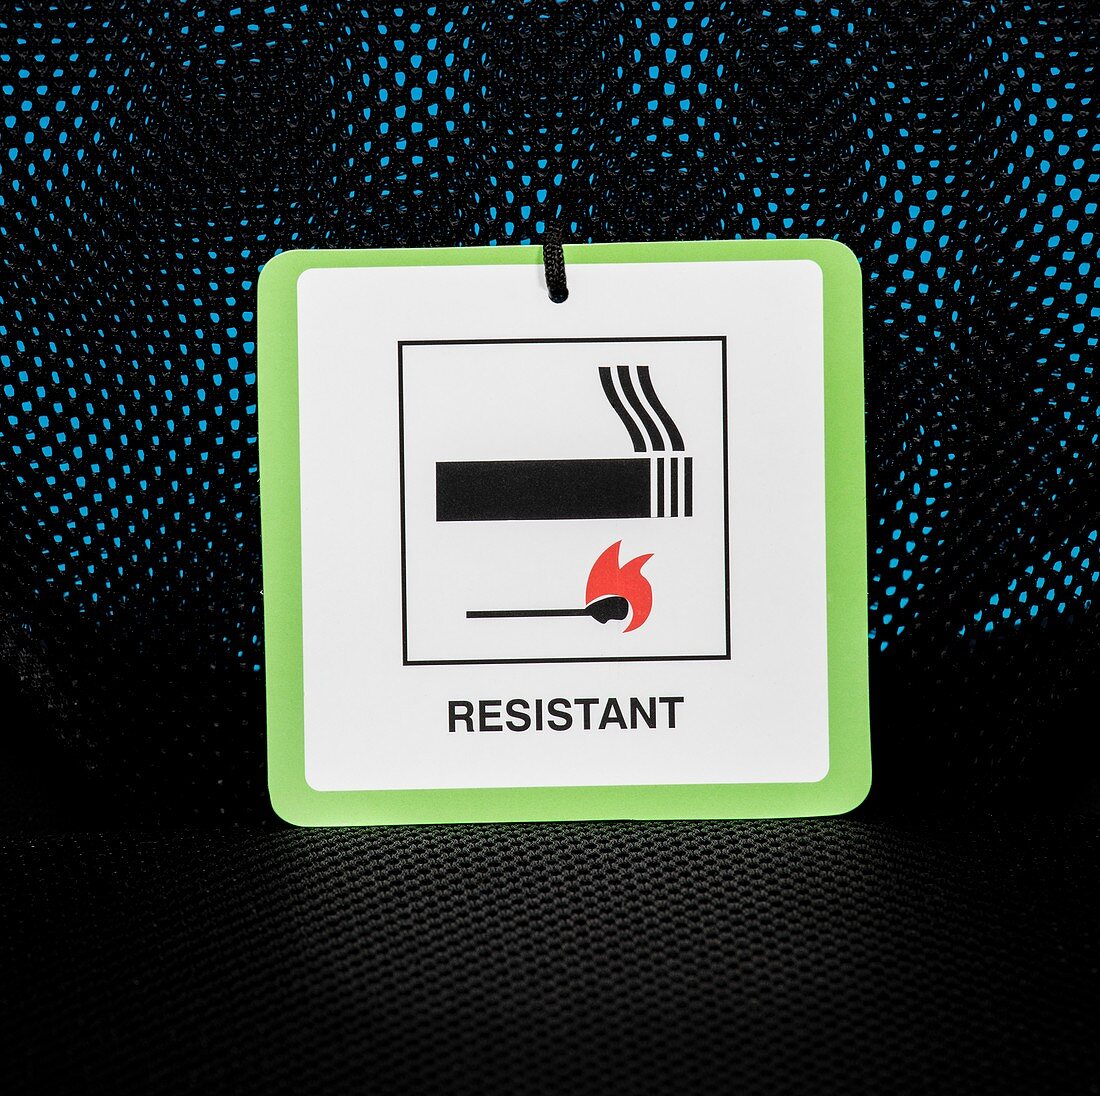 Fire resistance label